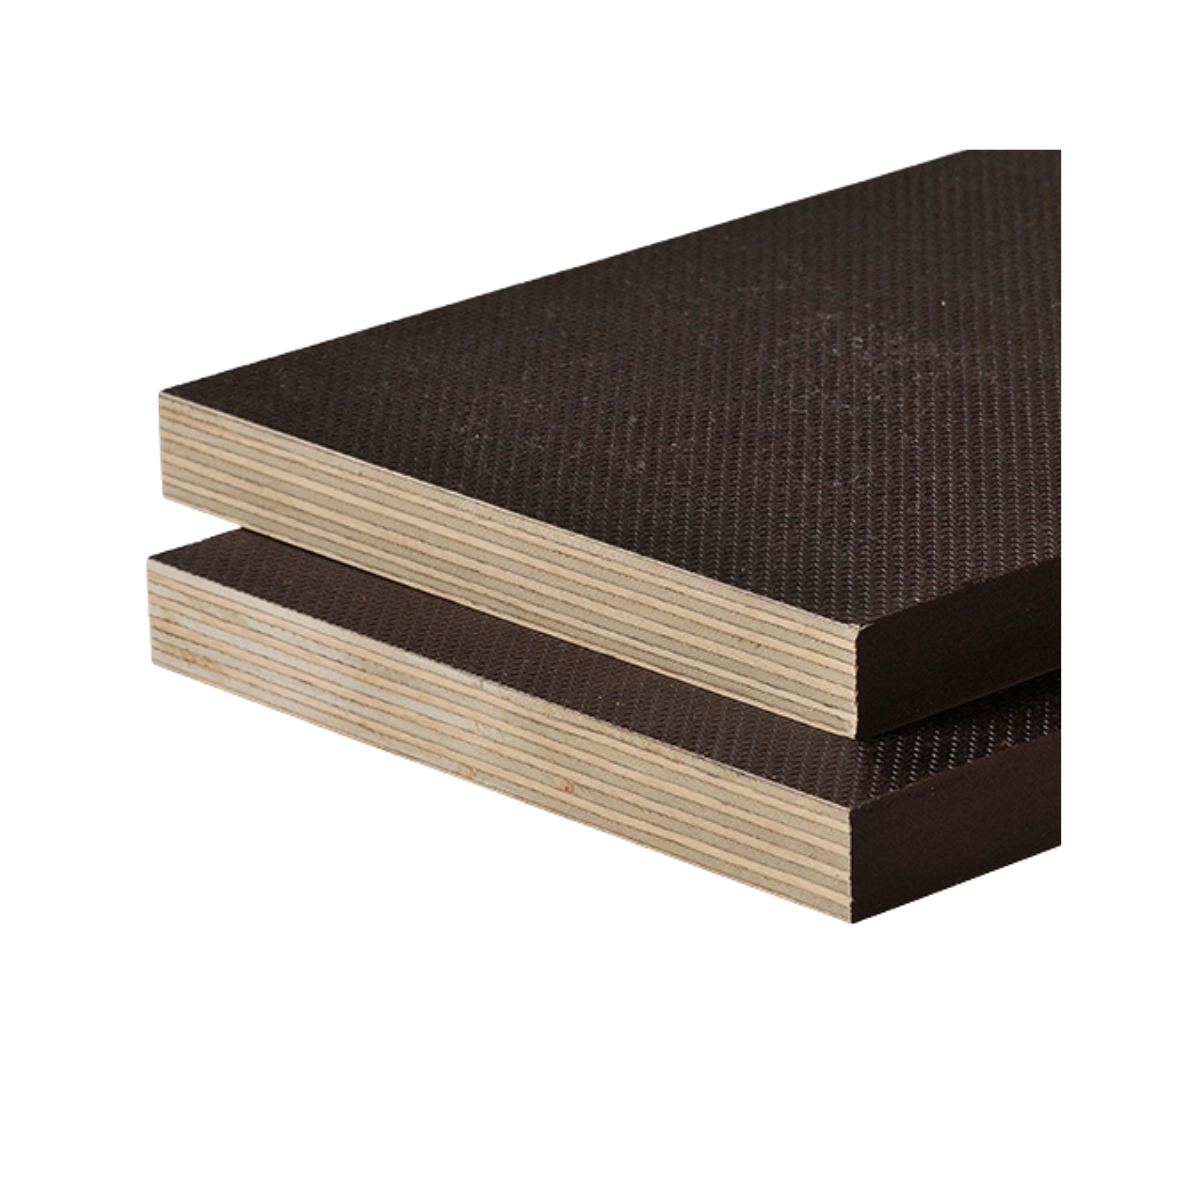 Antiskid playwood - Anti-slip TEGO formwork plywood 21 mm thickness, 1250 x 2500 mm class B, https:maxbau.ro